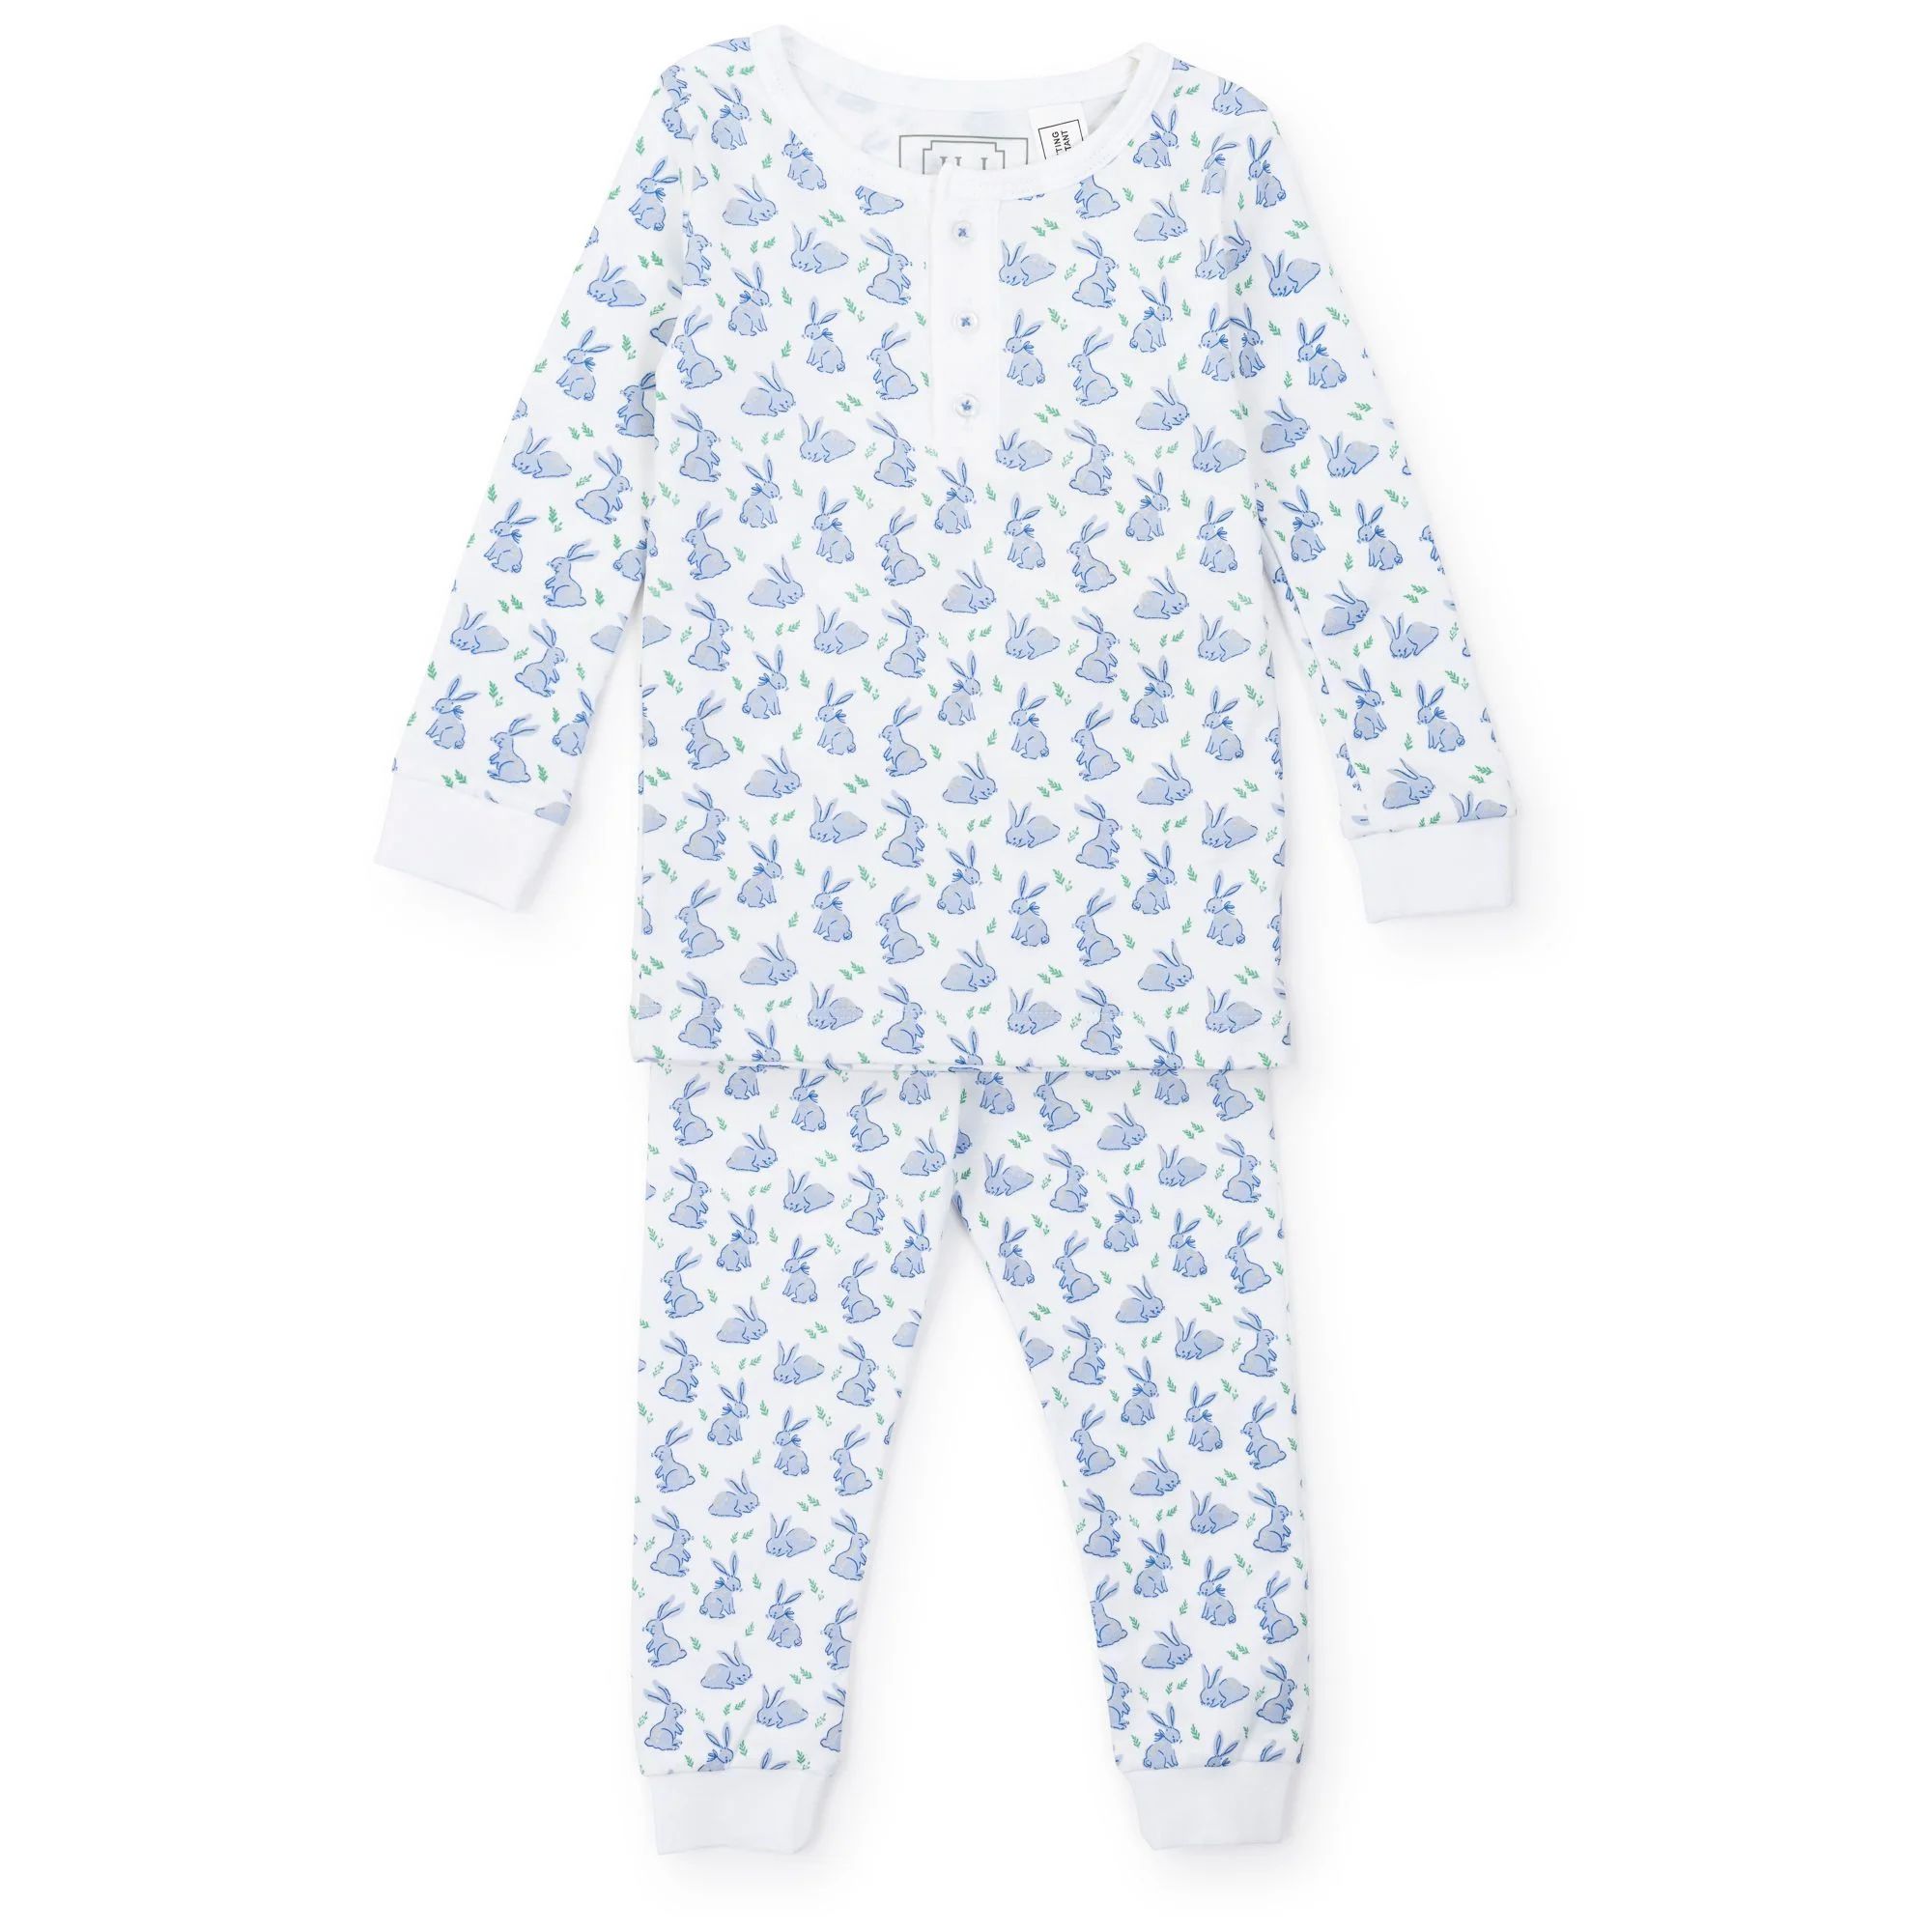 Lila and Hayes Jack Pajama Set - Bunny Hop Blue | JoJo Mommy